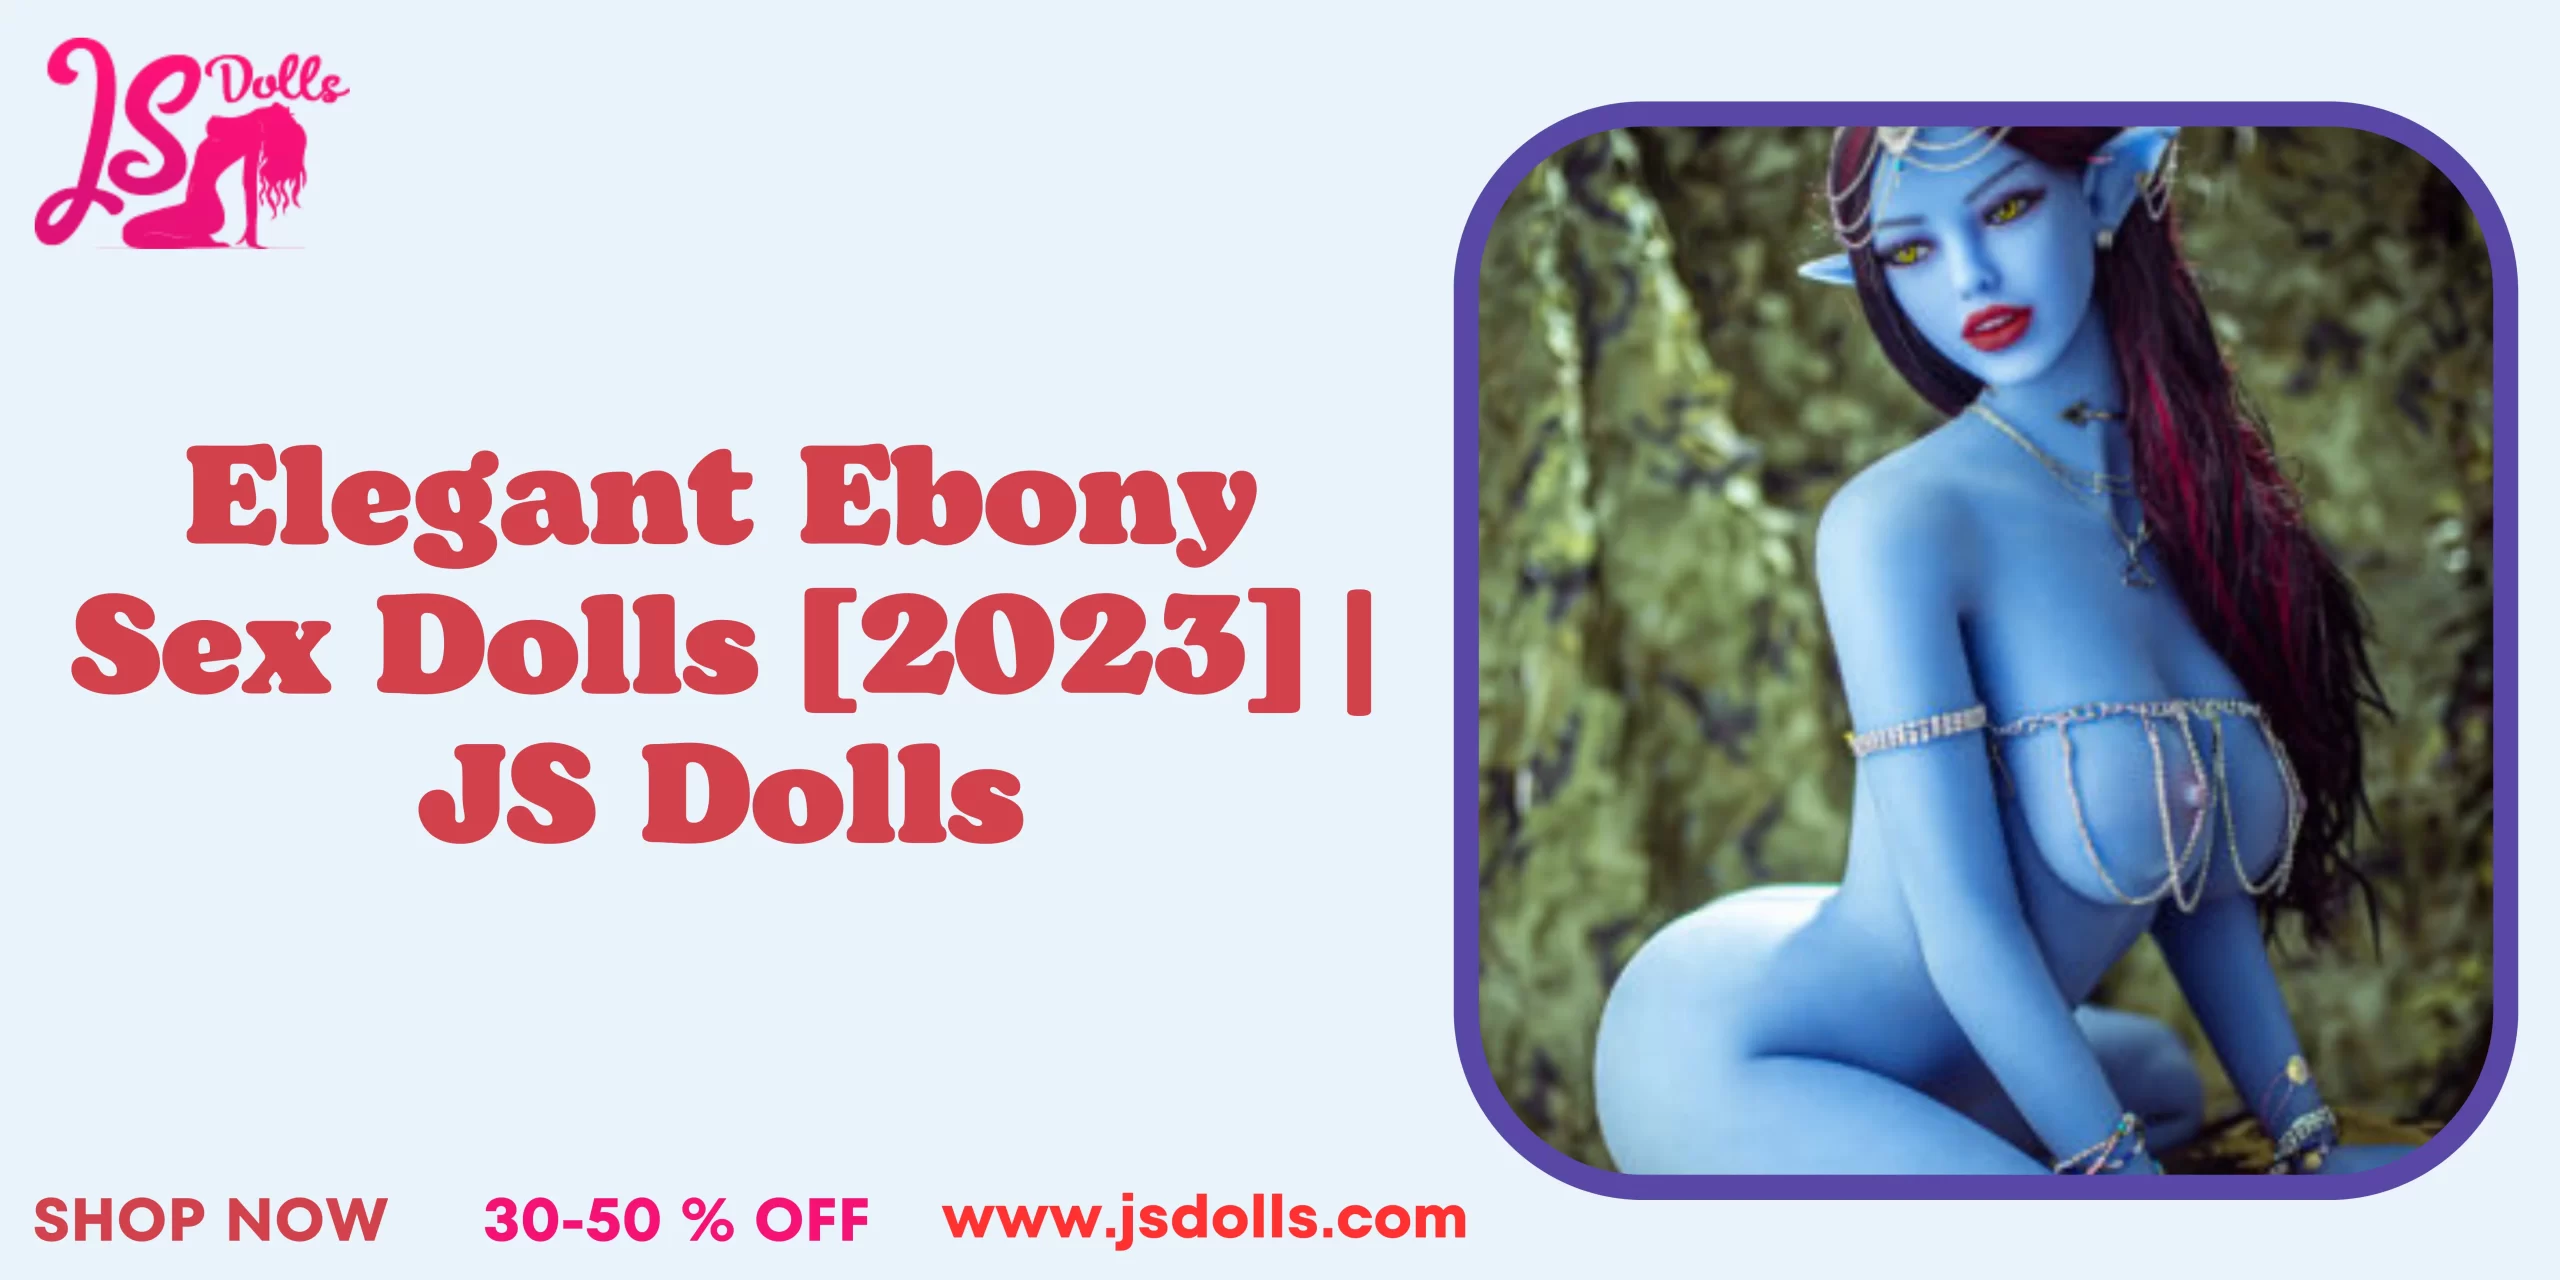 Ebony Sex Dolls